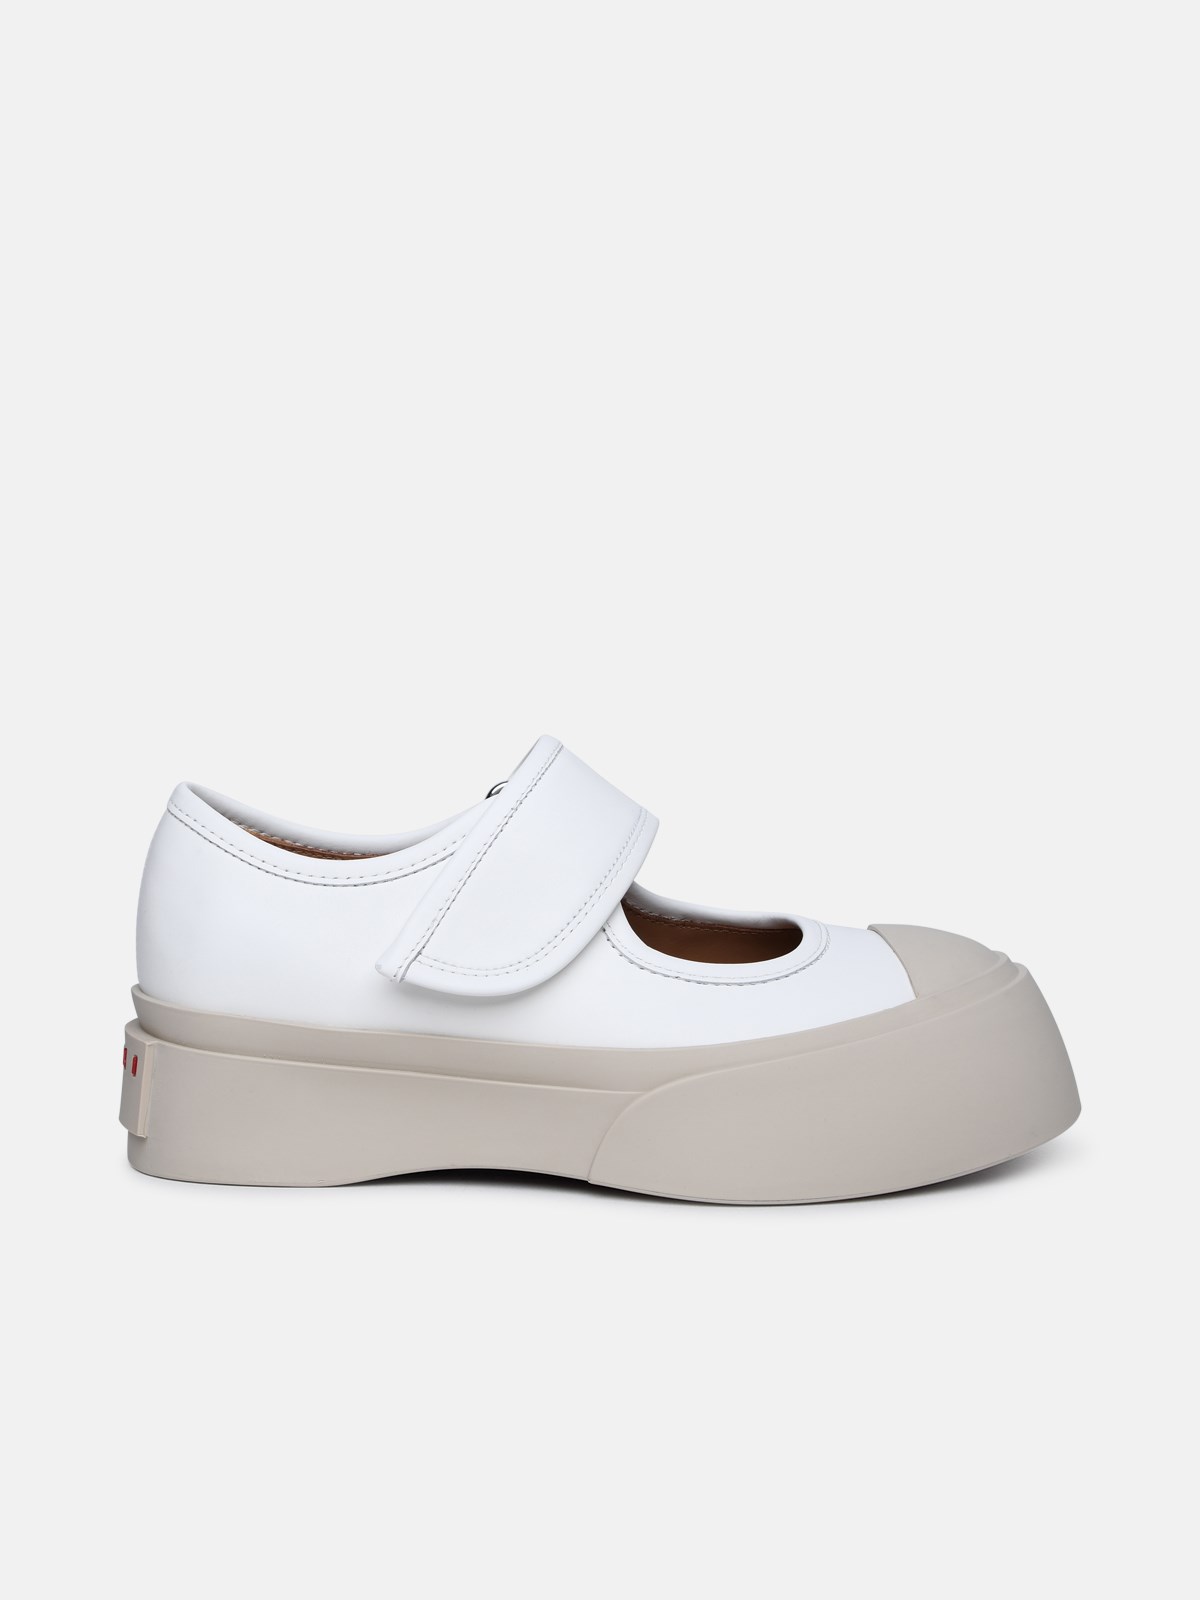 Marni Sneaker Mary Jane In White